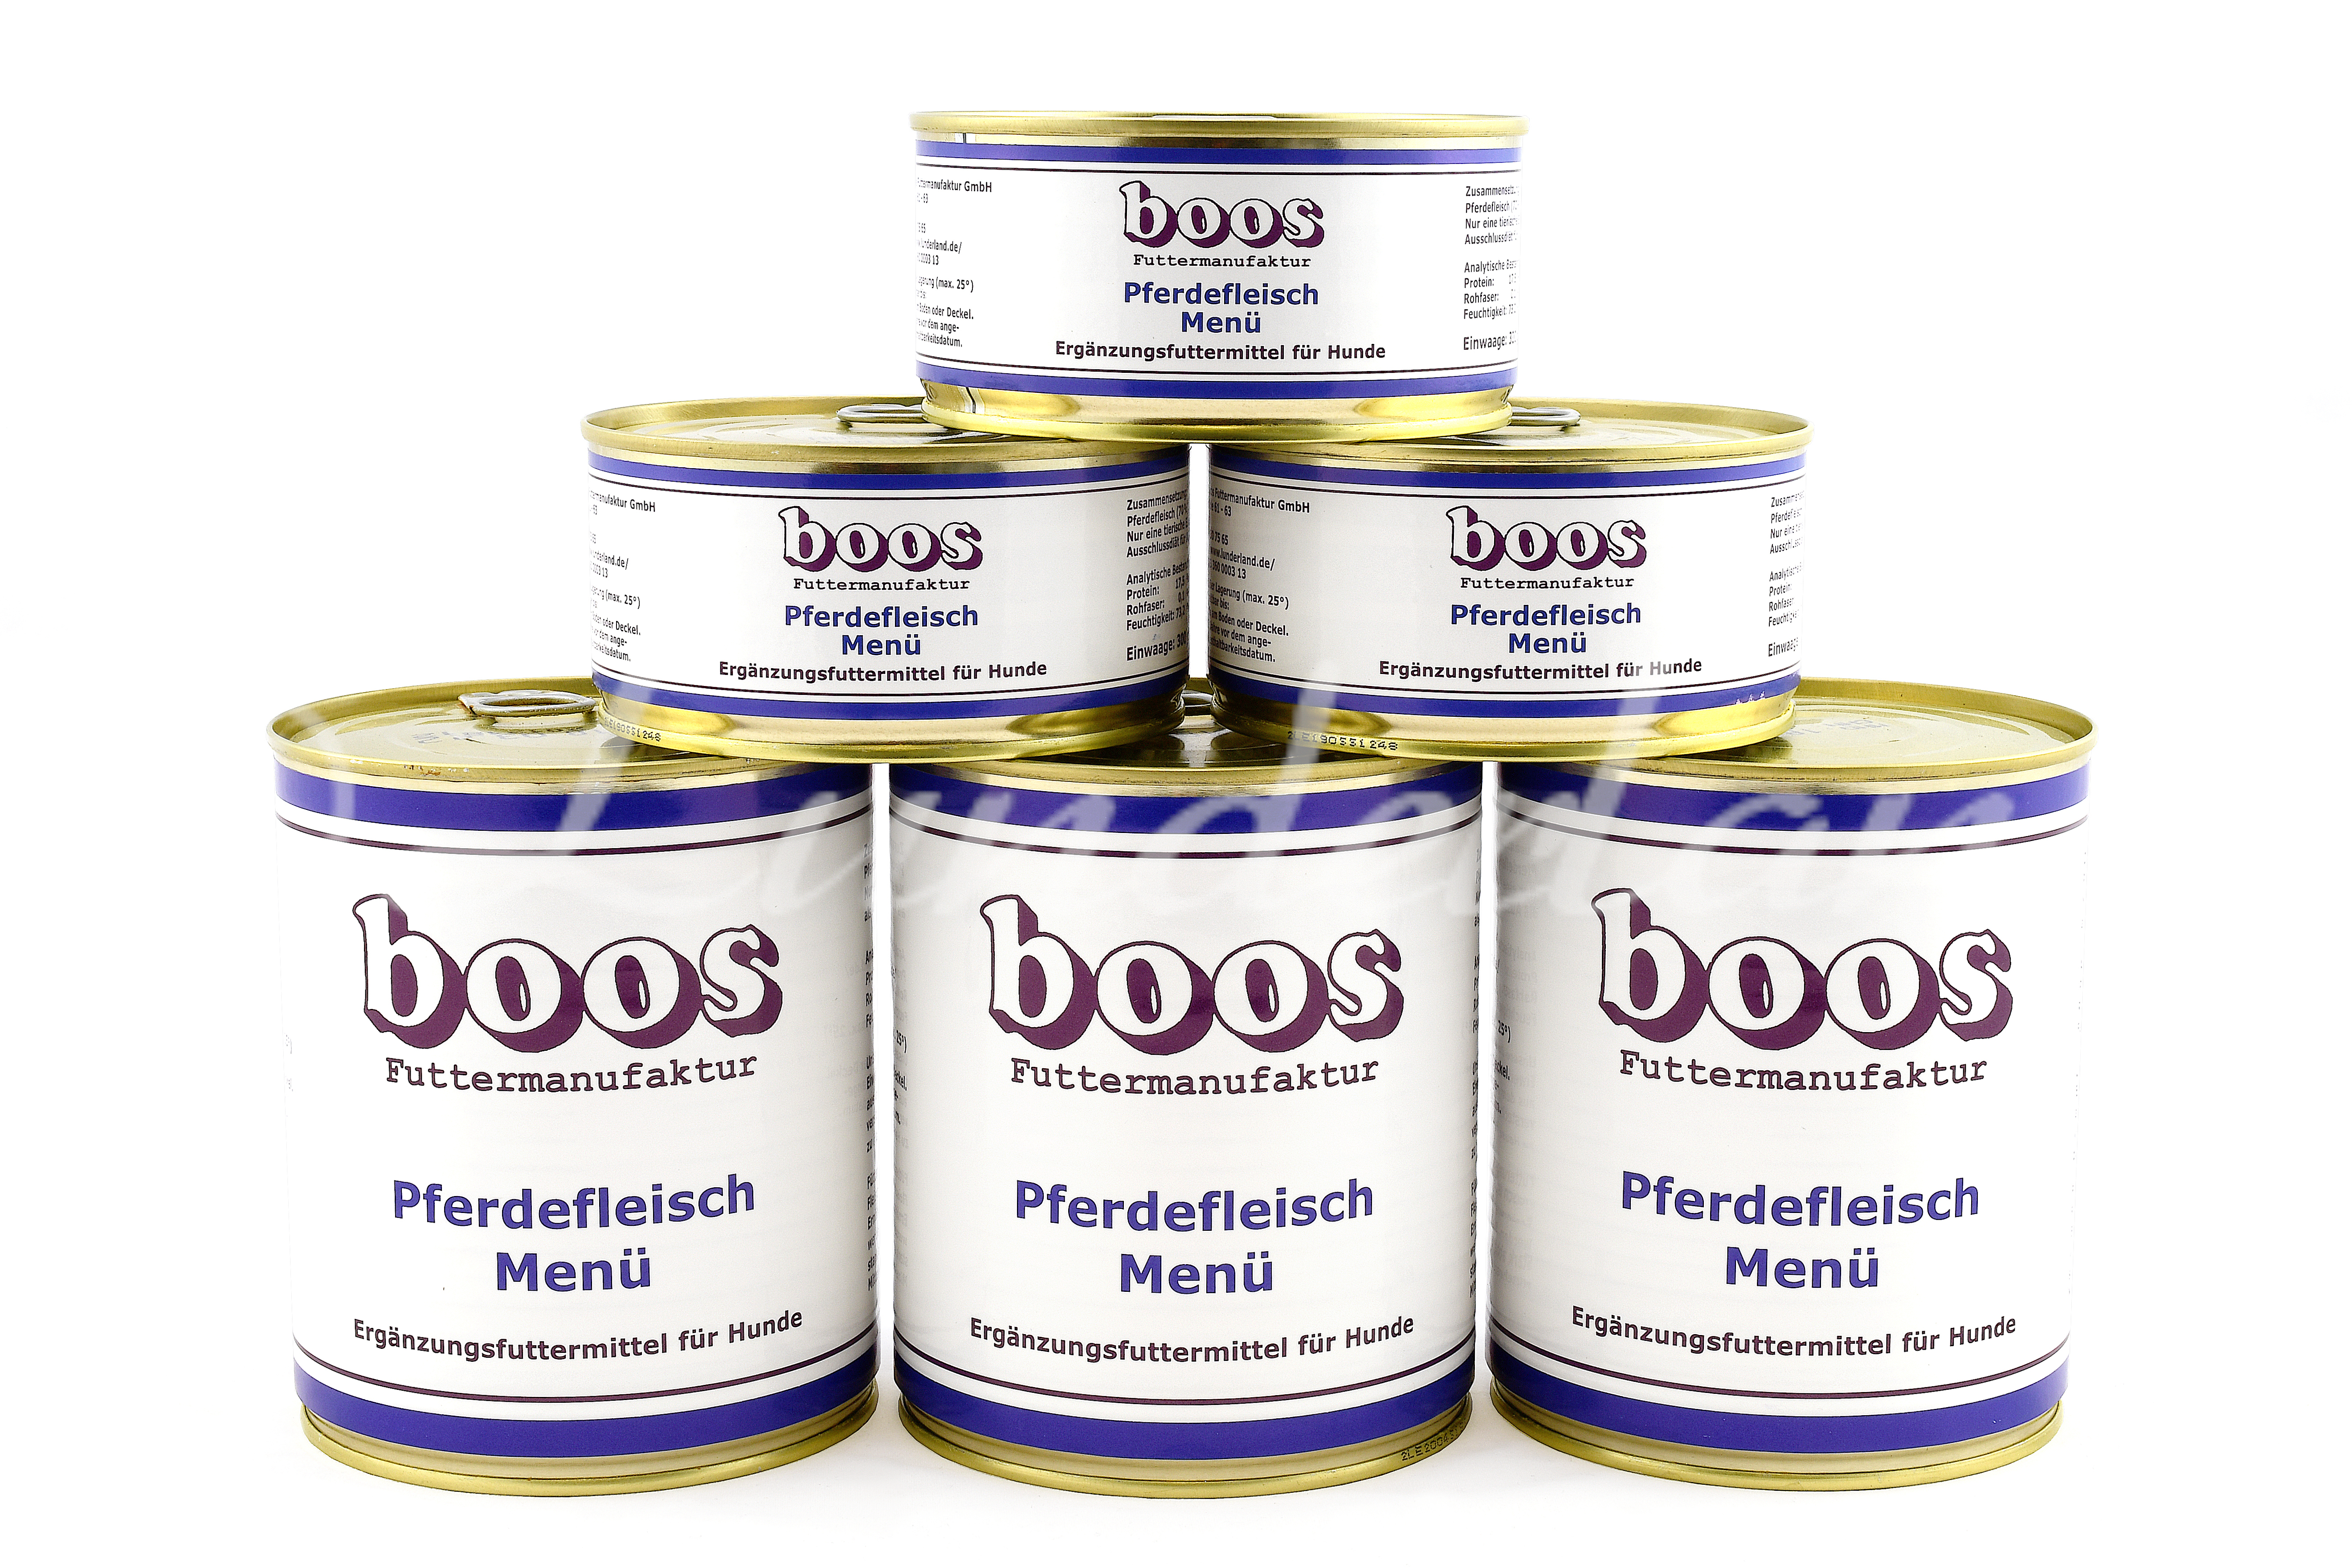 Boos-Pferdefleisch-Menü